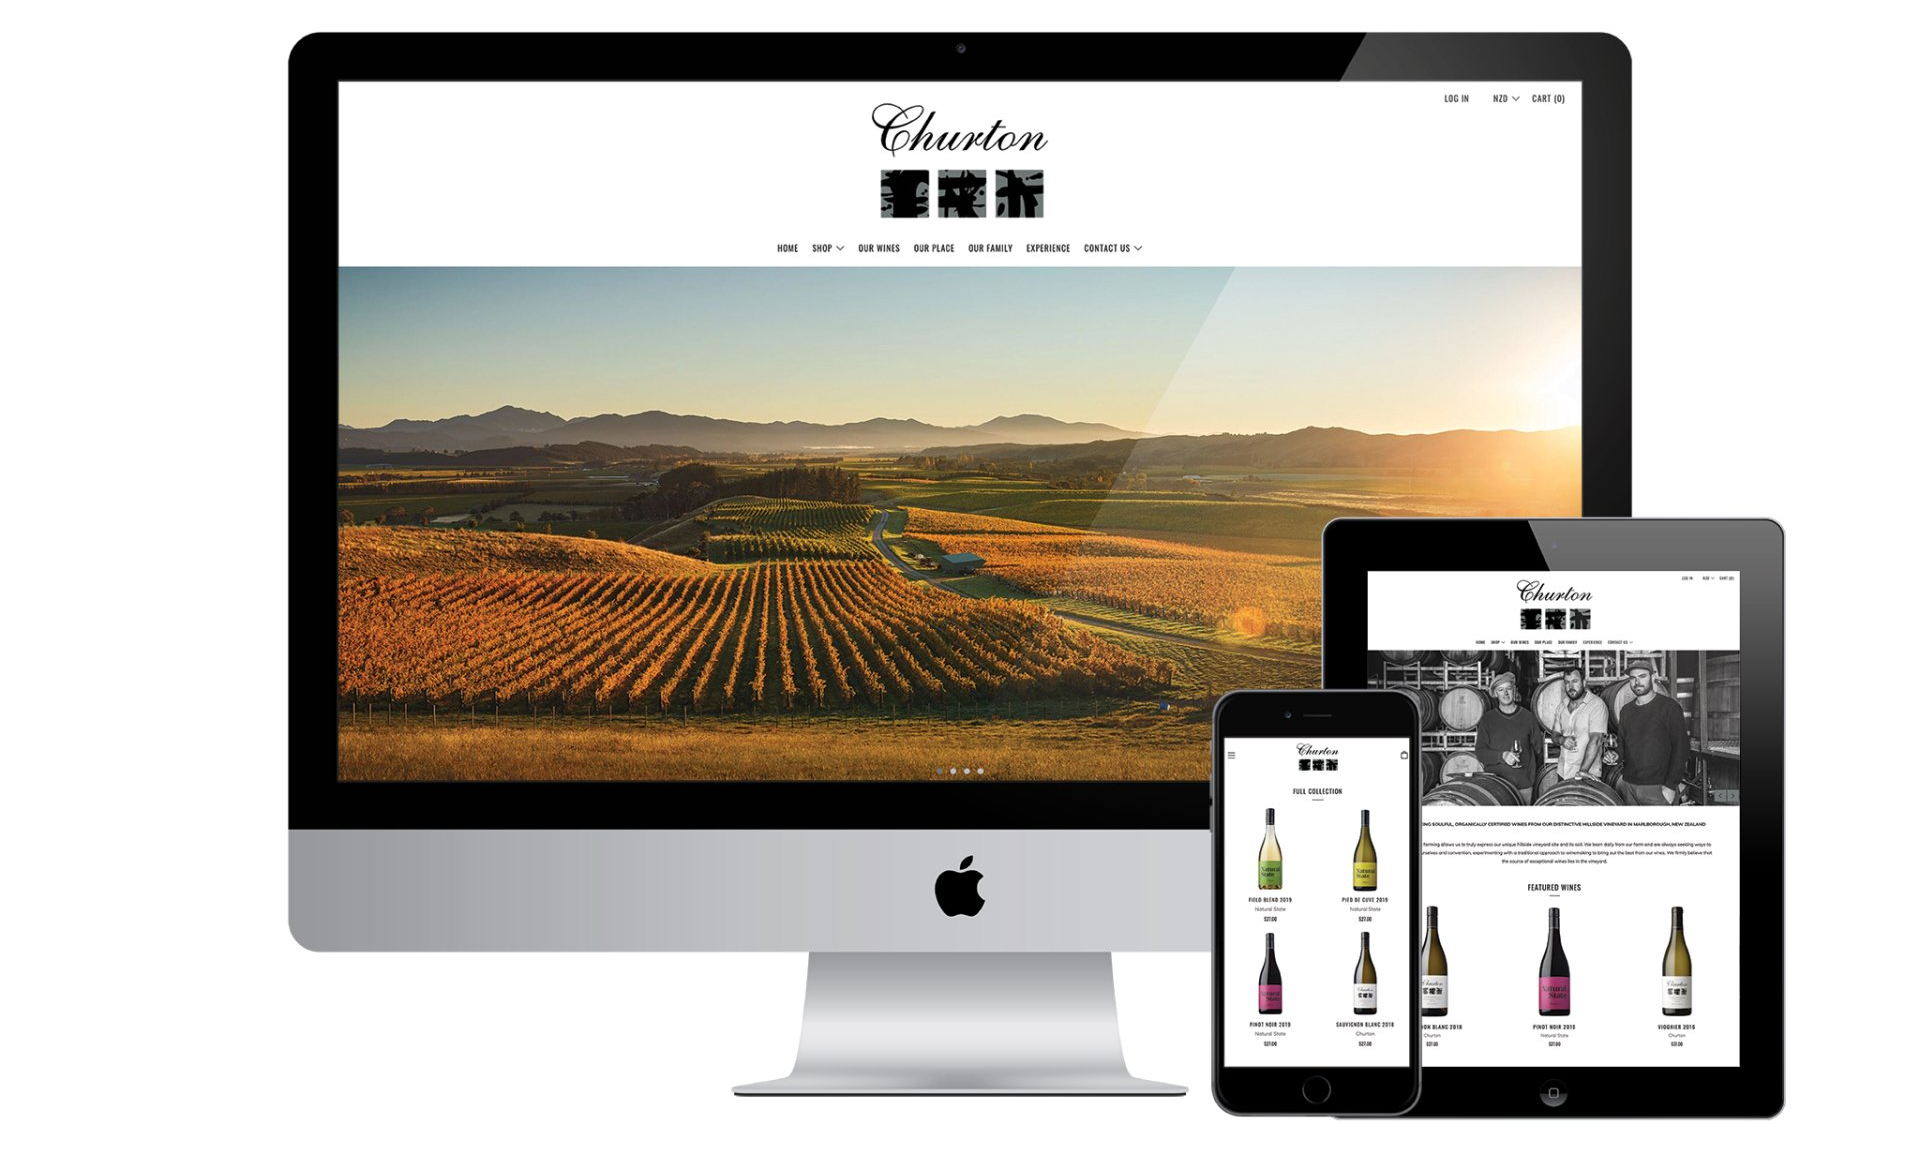 Churton Wines website designed by Vanilla Hayes creative graphic design  studio in Blenheim, Marlborough, New Zealand